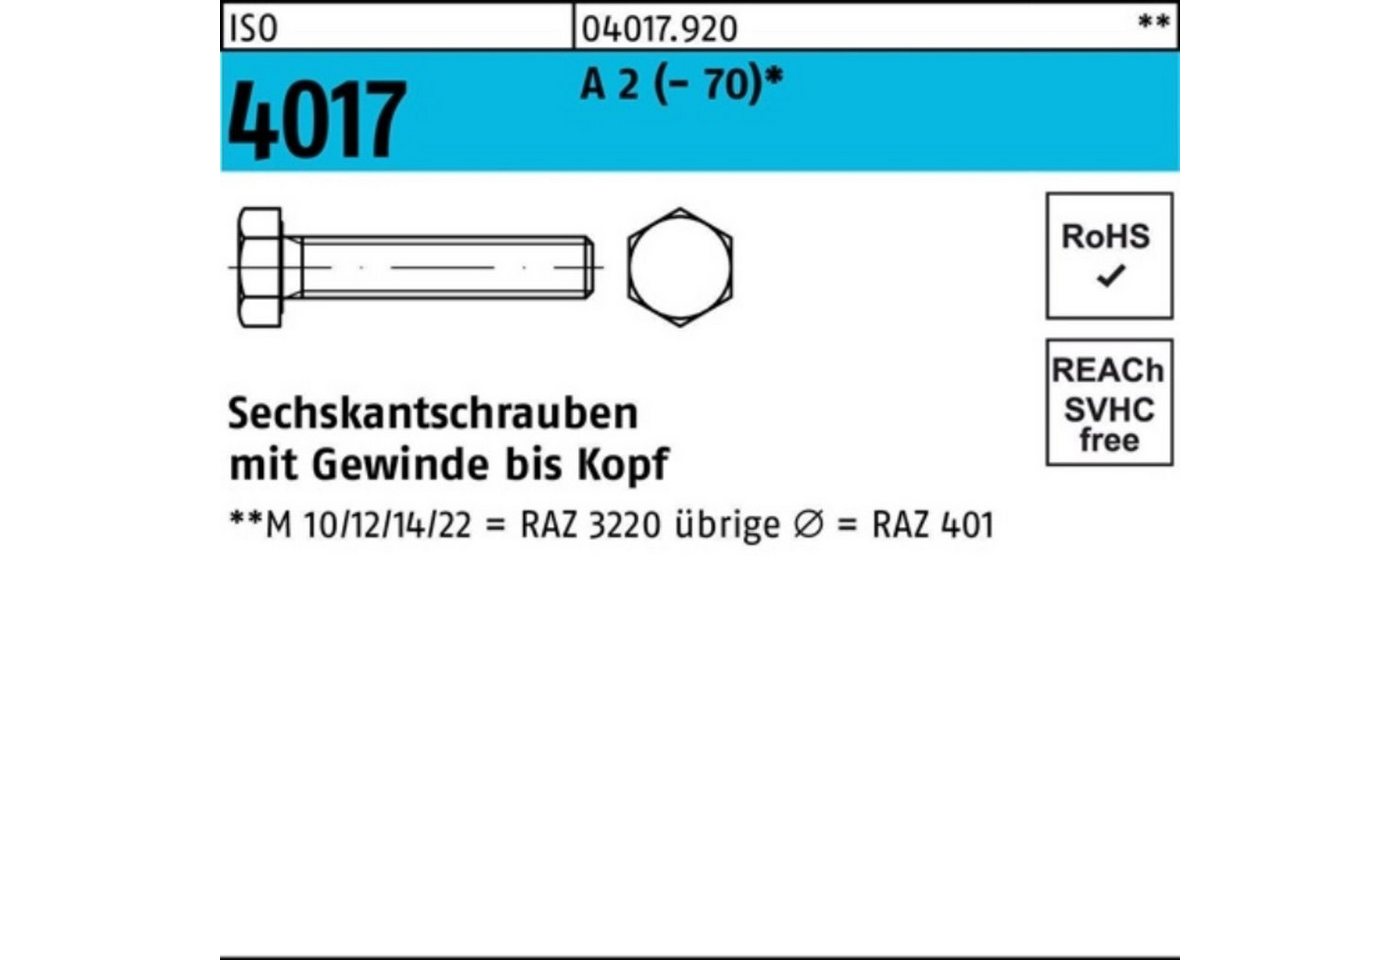 Bufab Sechskantschraube 100er Pack Sechskantschraube ISO 4017 VG M10x 140 A 2 (70) 1 Stück von Bufab